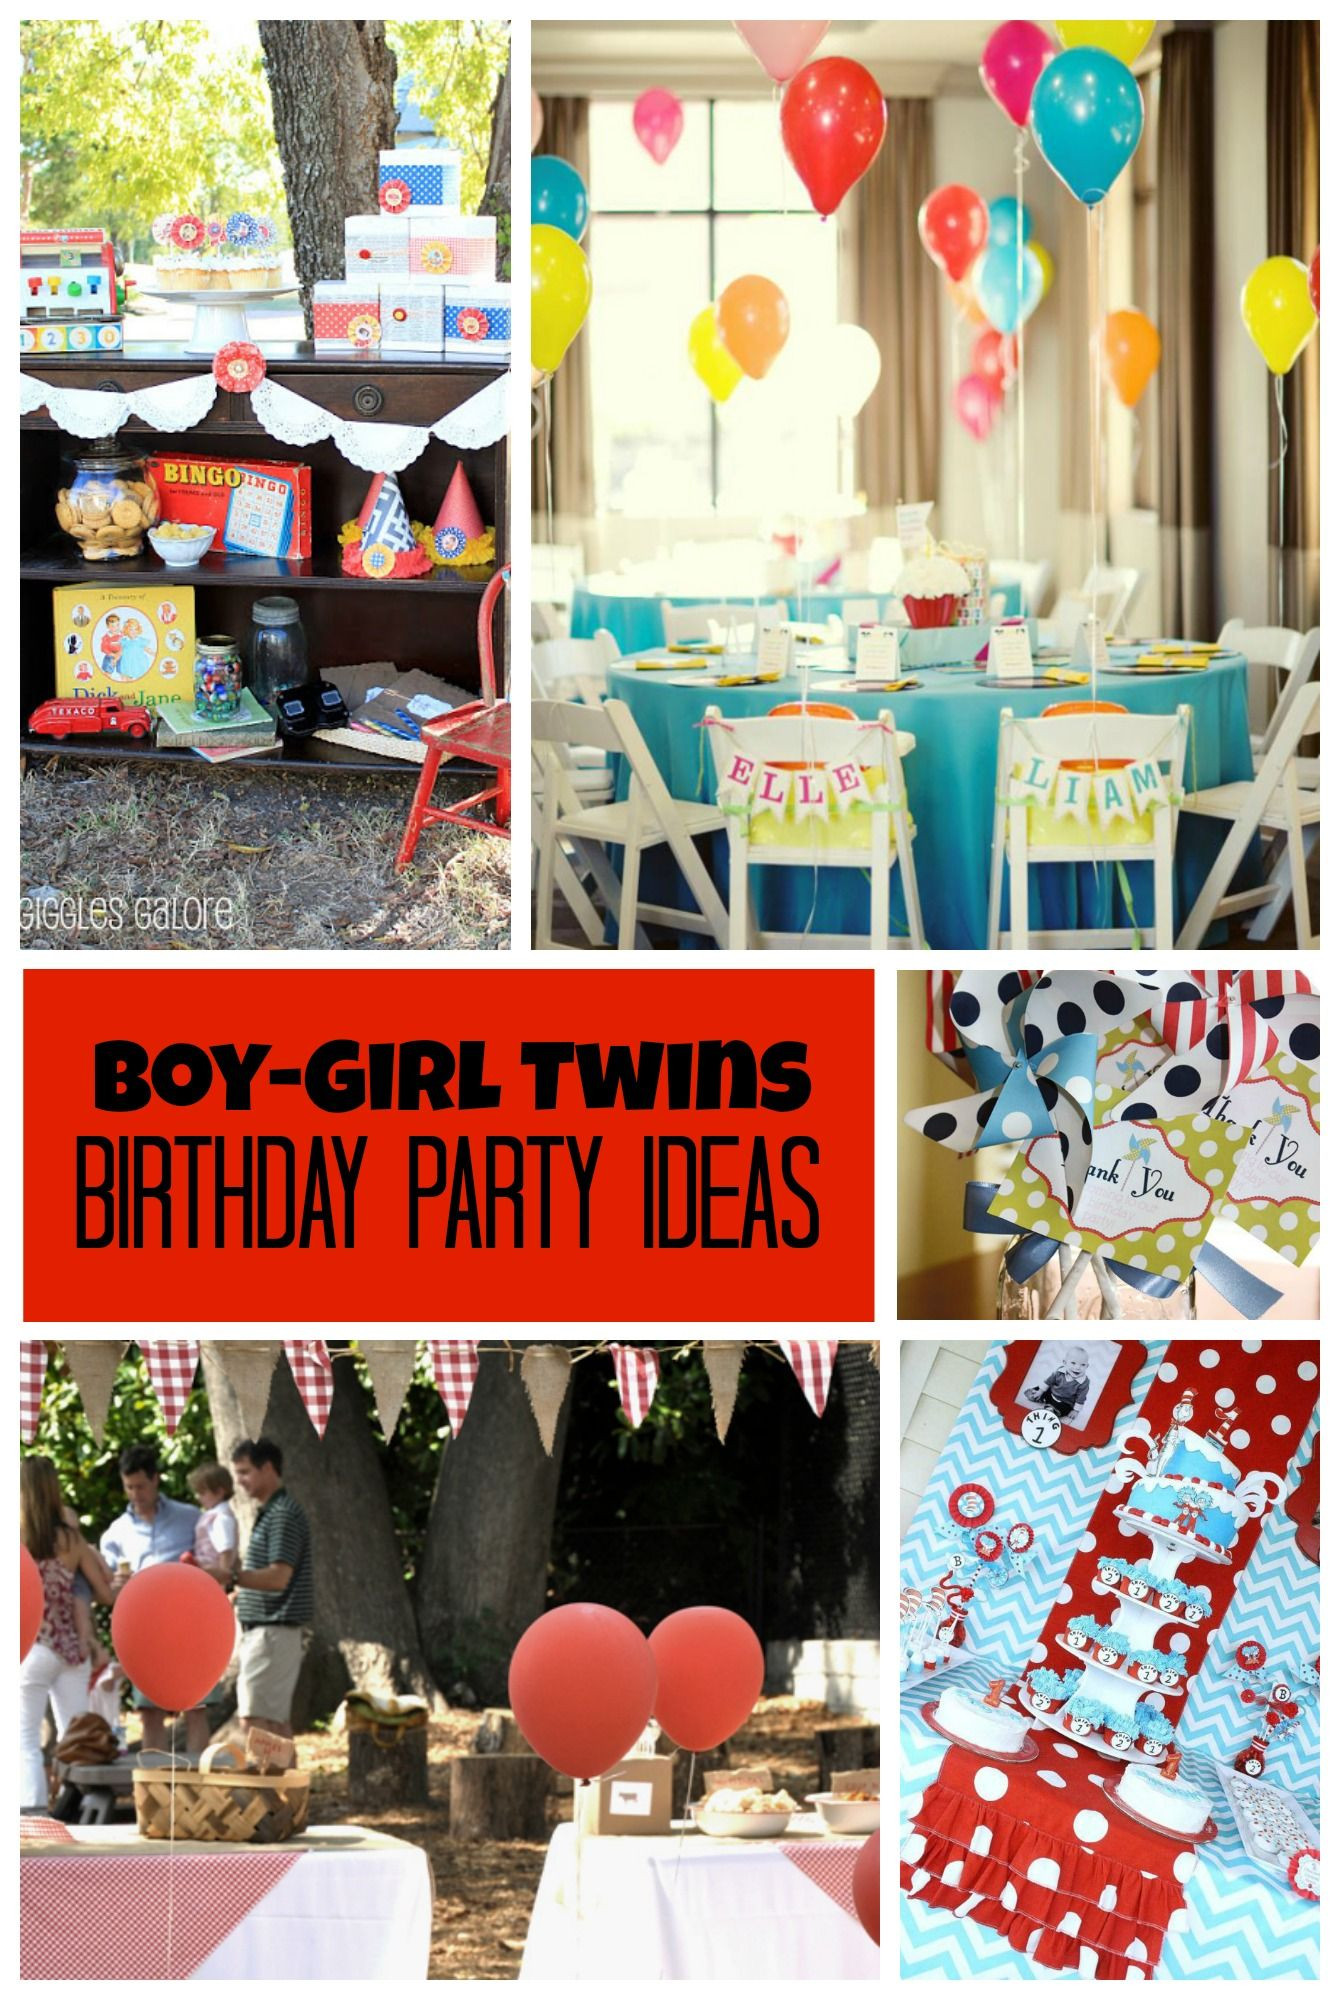 Boys 2Nd Birthday Party Ideas
 Twins Birthday Party Ideas for Boy Girl Twins